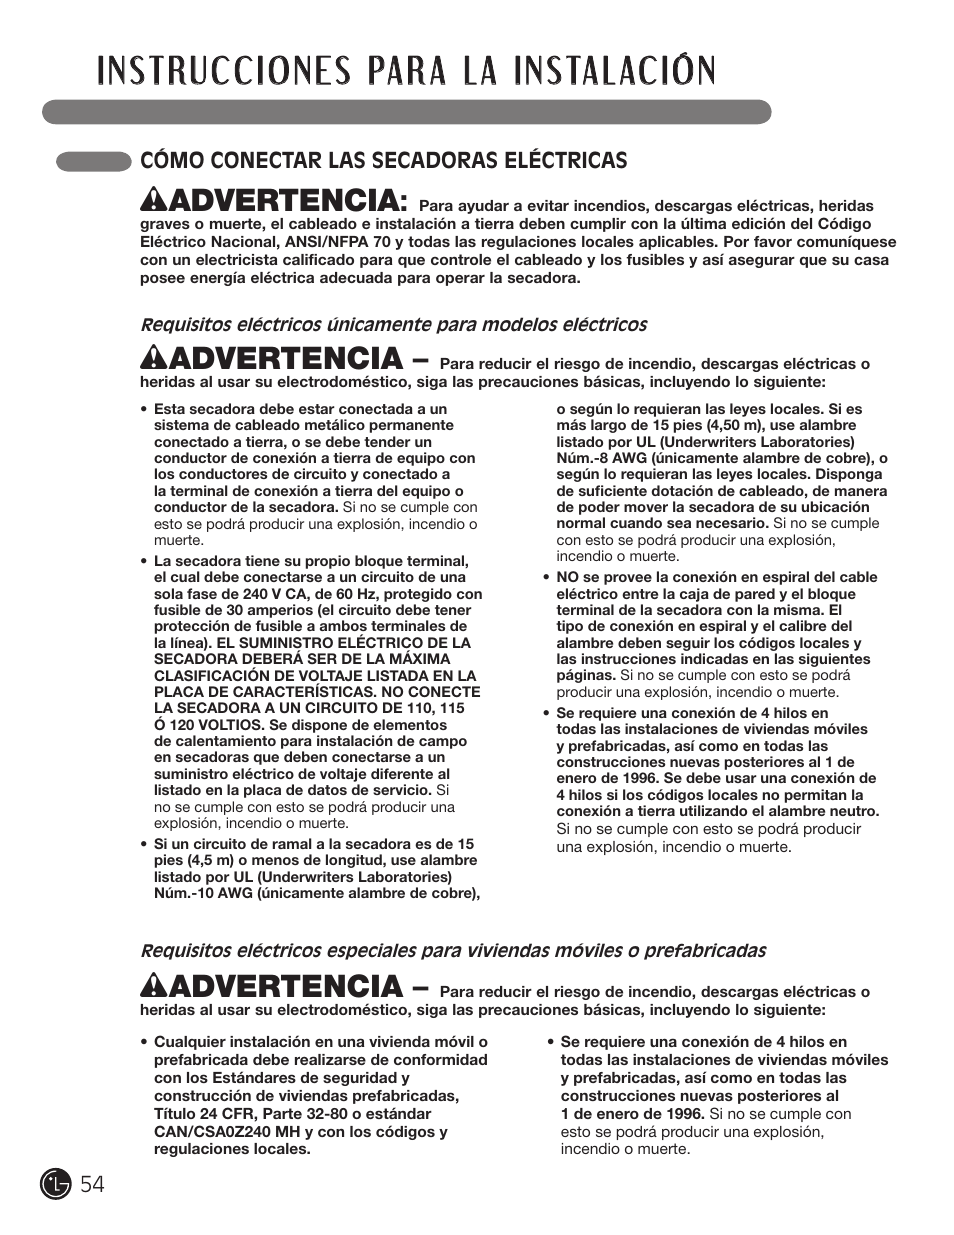 W advertencia | LG D5966W User Manual | Page 54 / 80